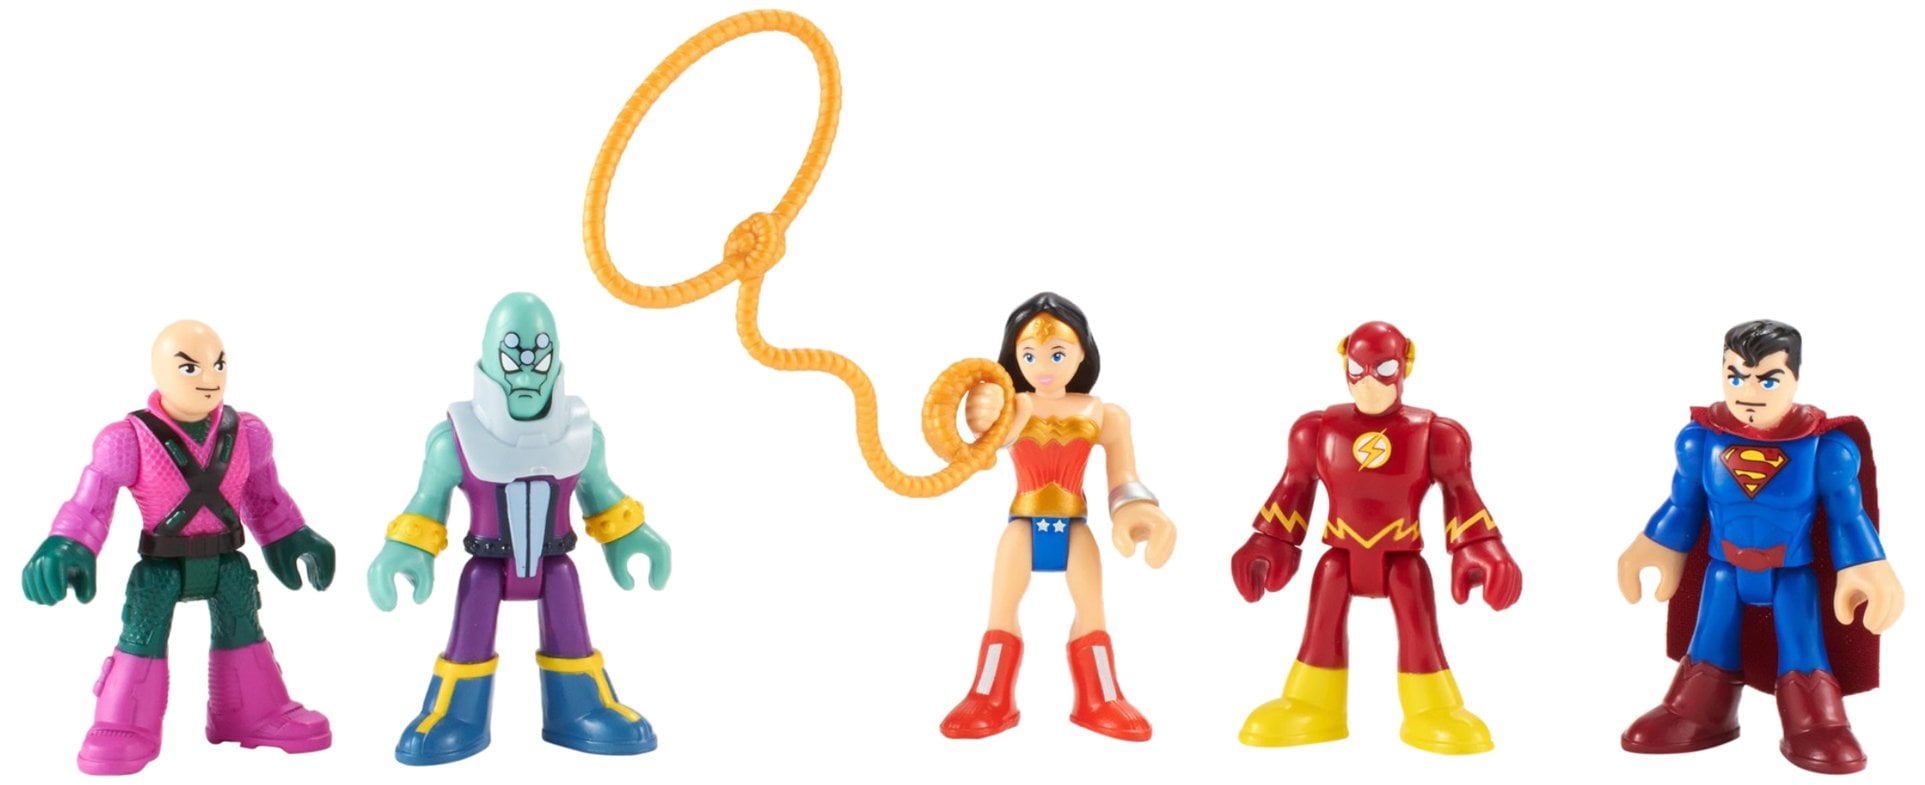 Brainiac Imaginext DC Marvel Super Hero Squad Friends Figure